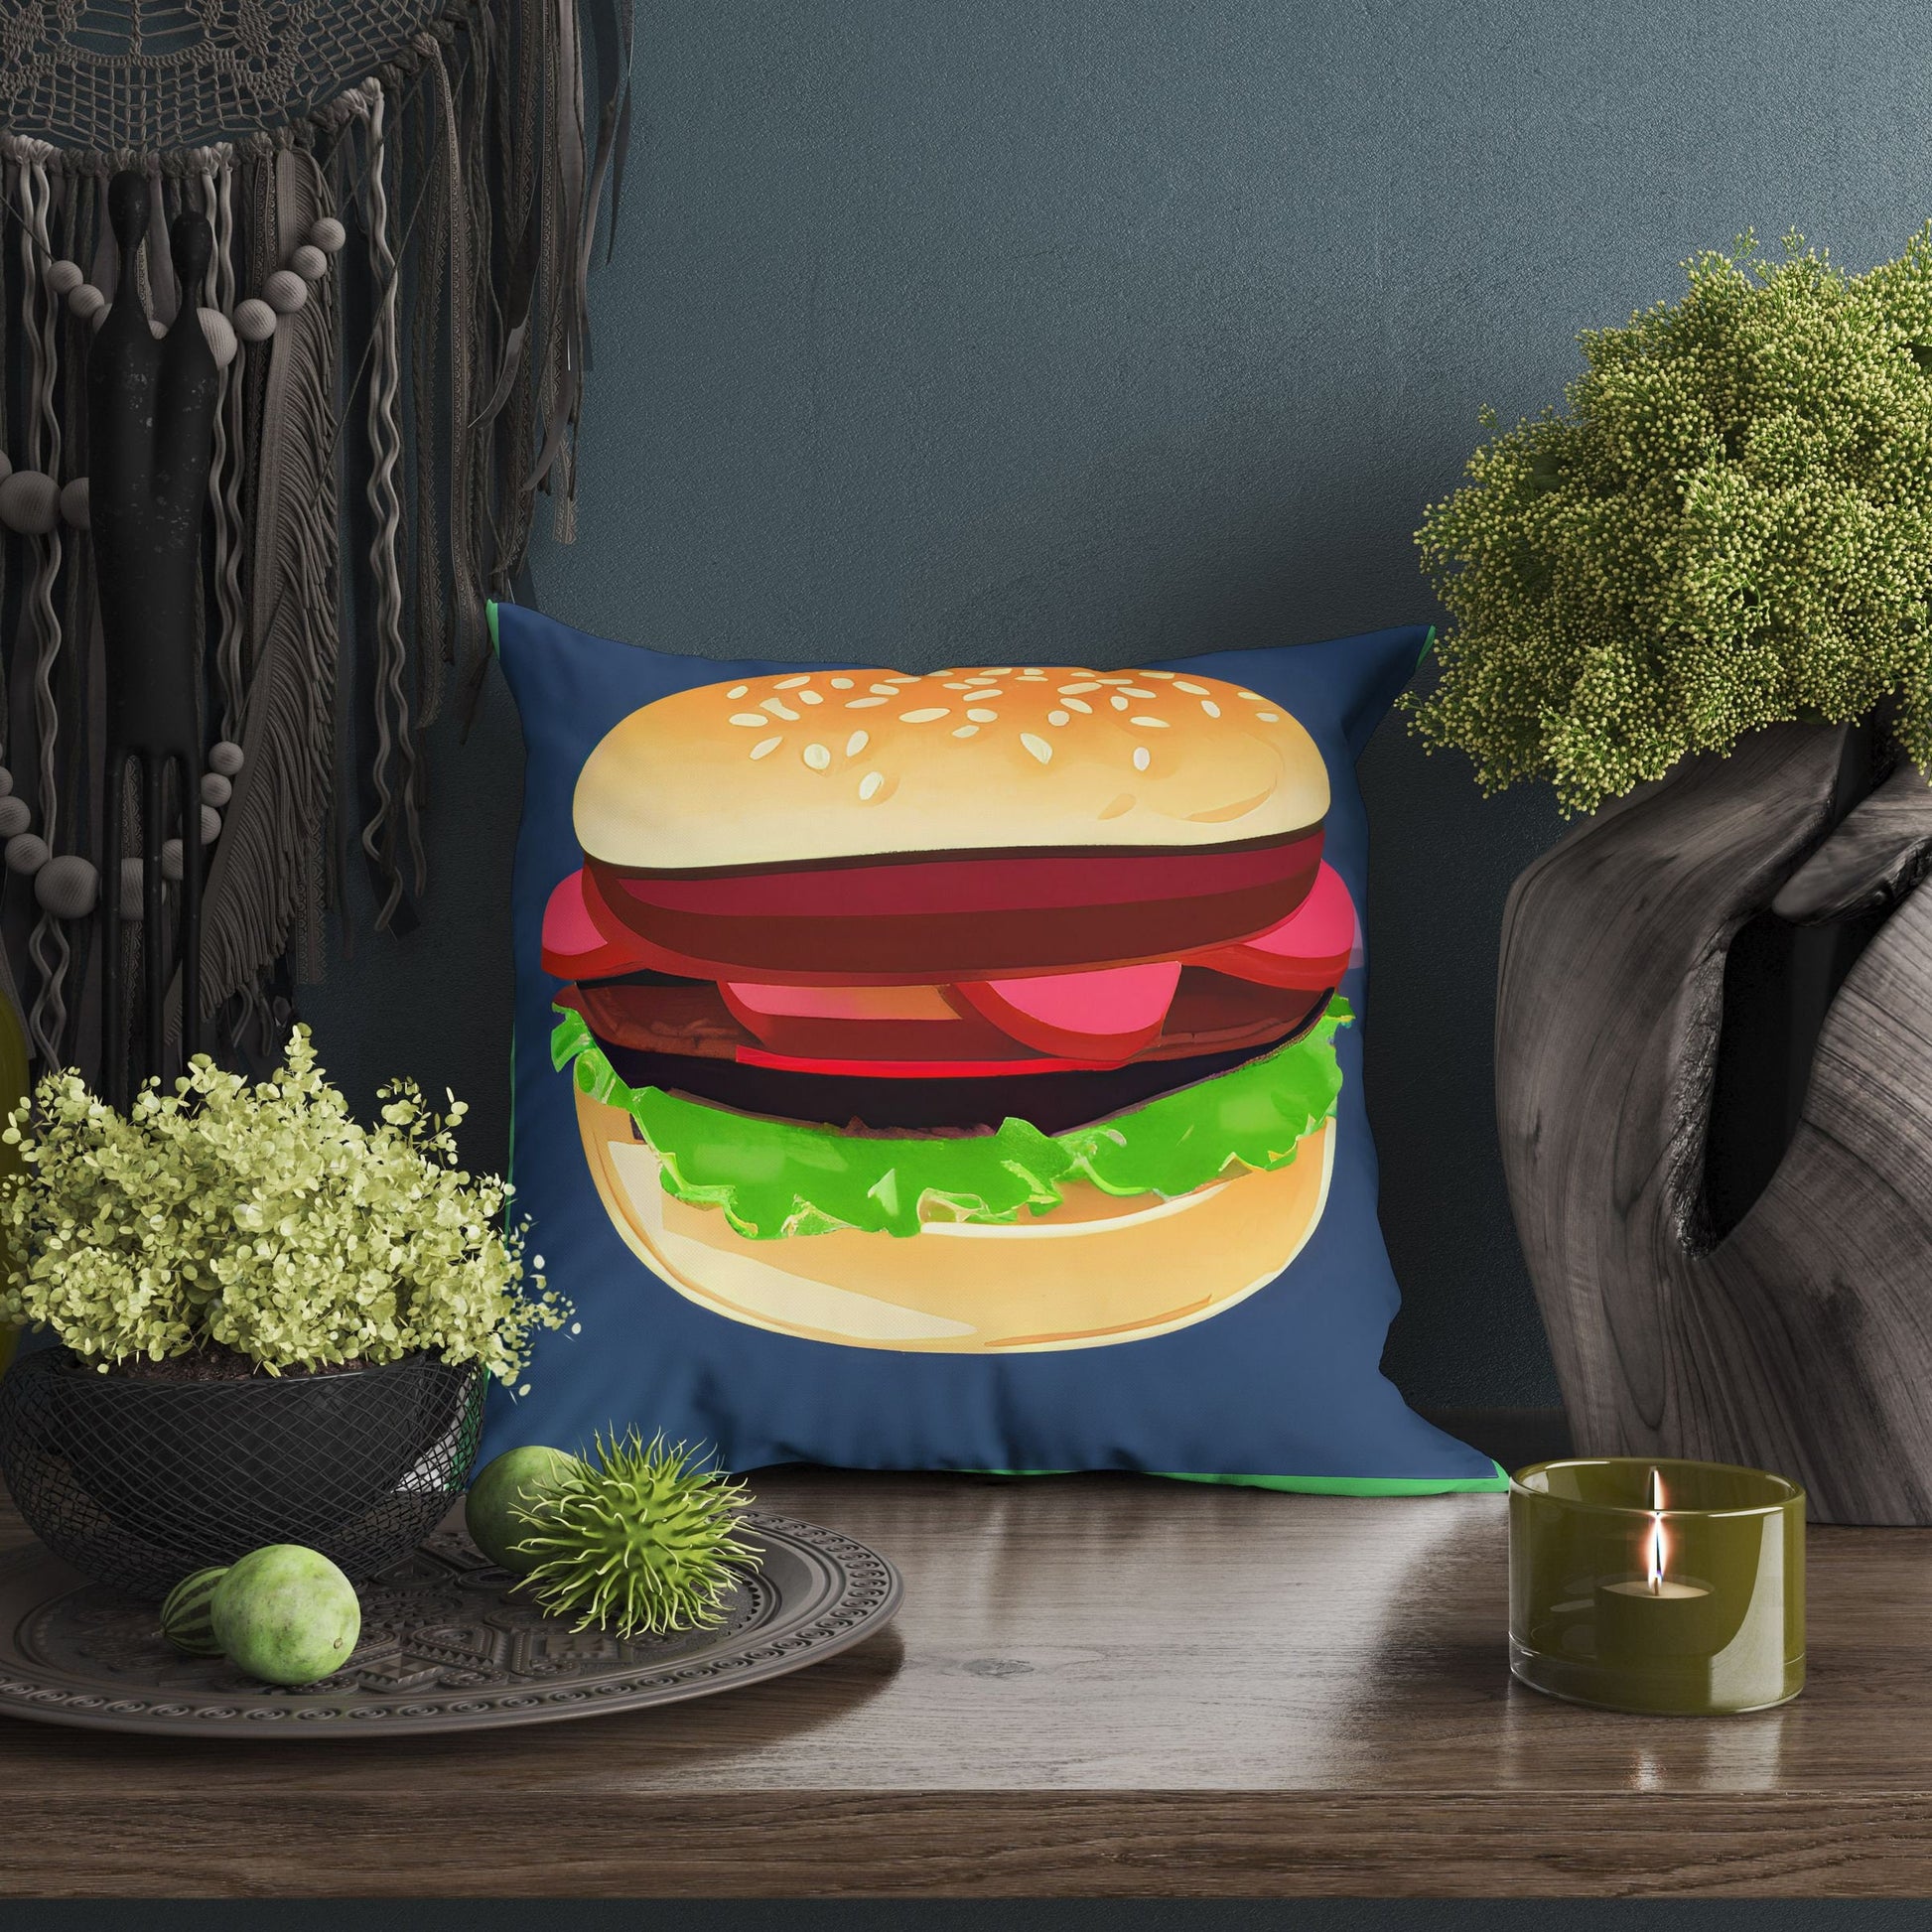 Hamburger Decorative Pillow, Abstract Throw Pillow Cover, Soft Pillow Cases, Beautiful Pillow, Home And Living, Sofa Pillows